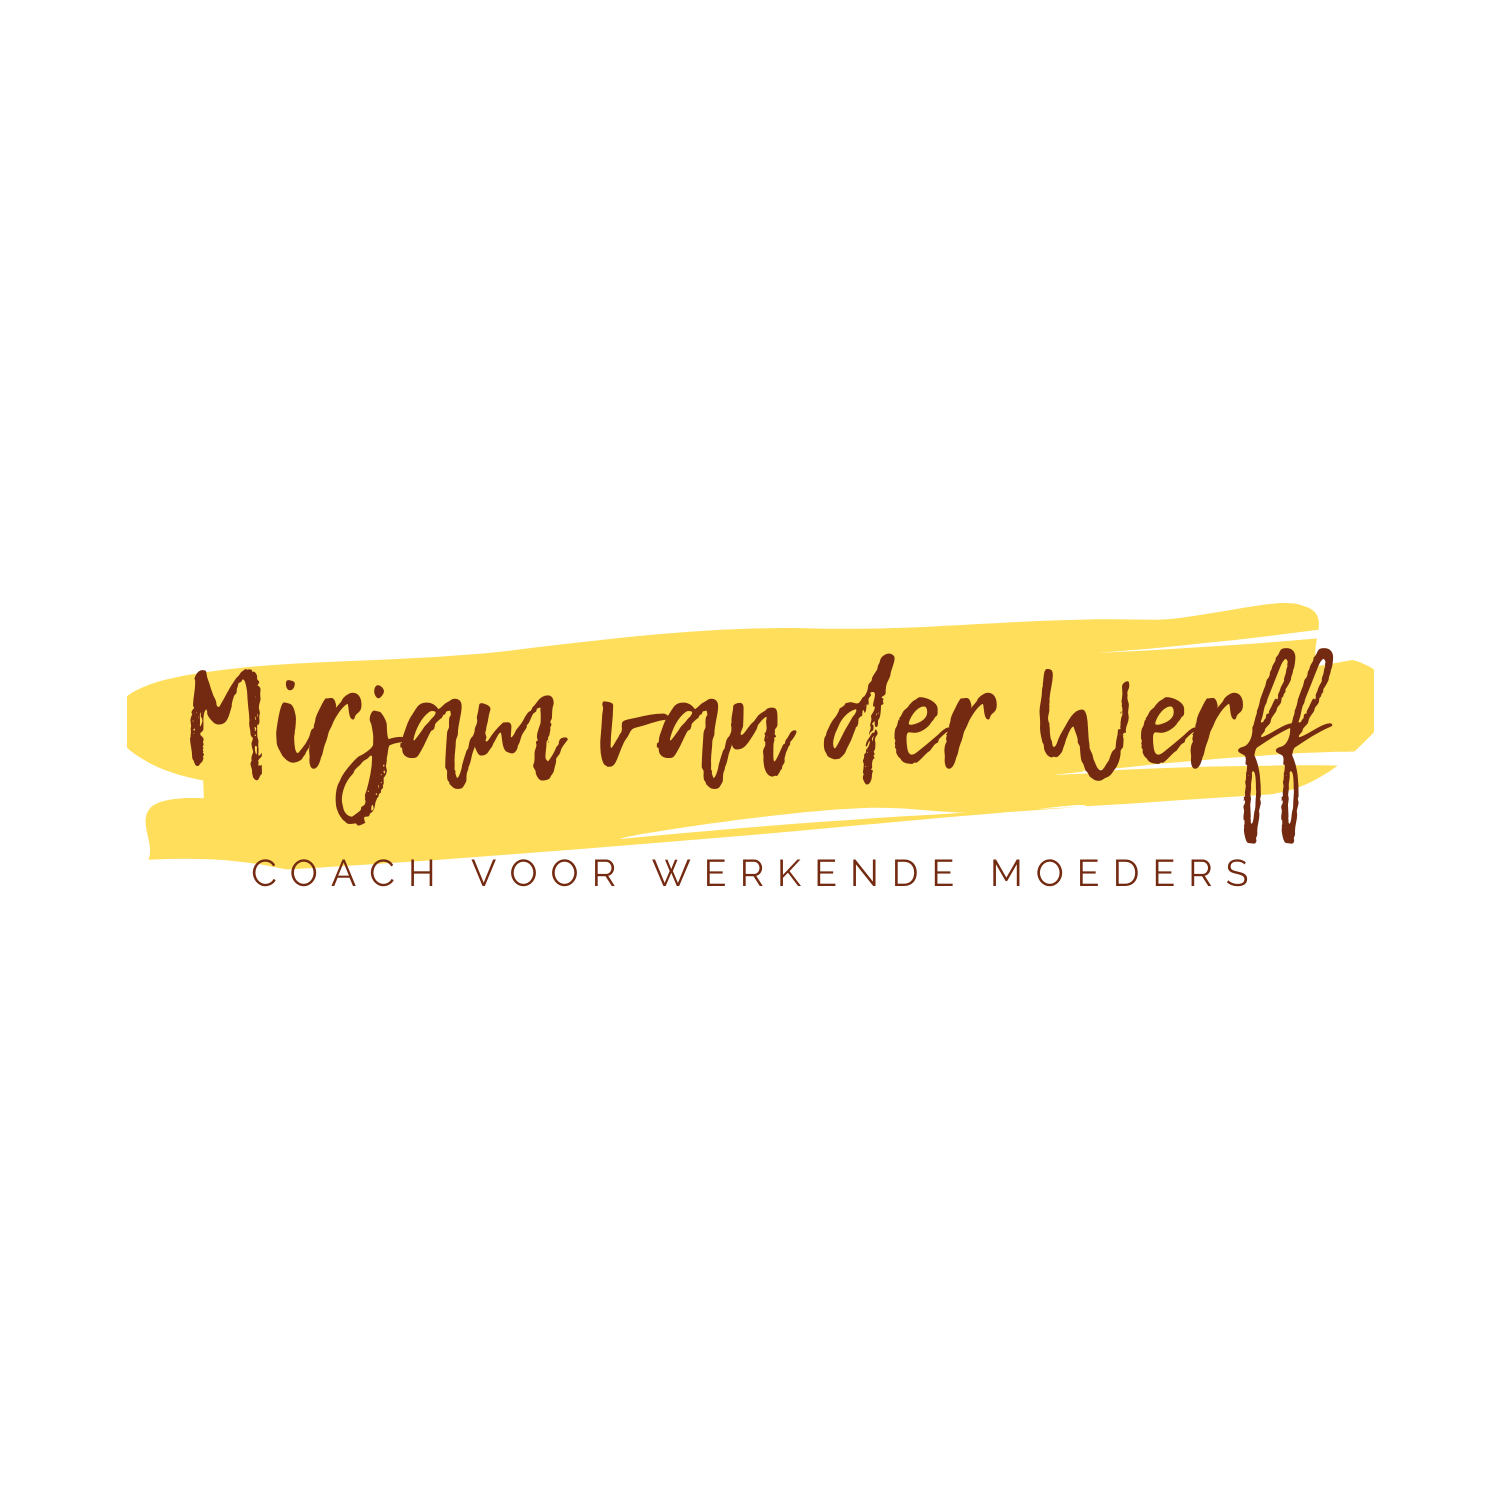 Mirjam van der Werff coaching voor werkende moeders